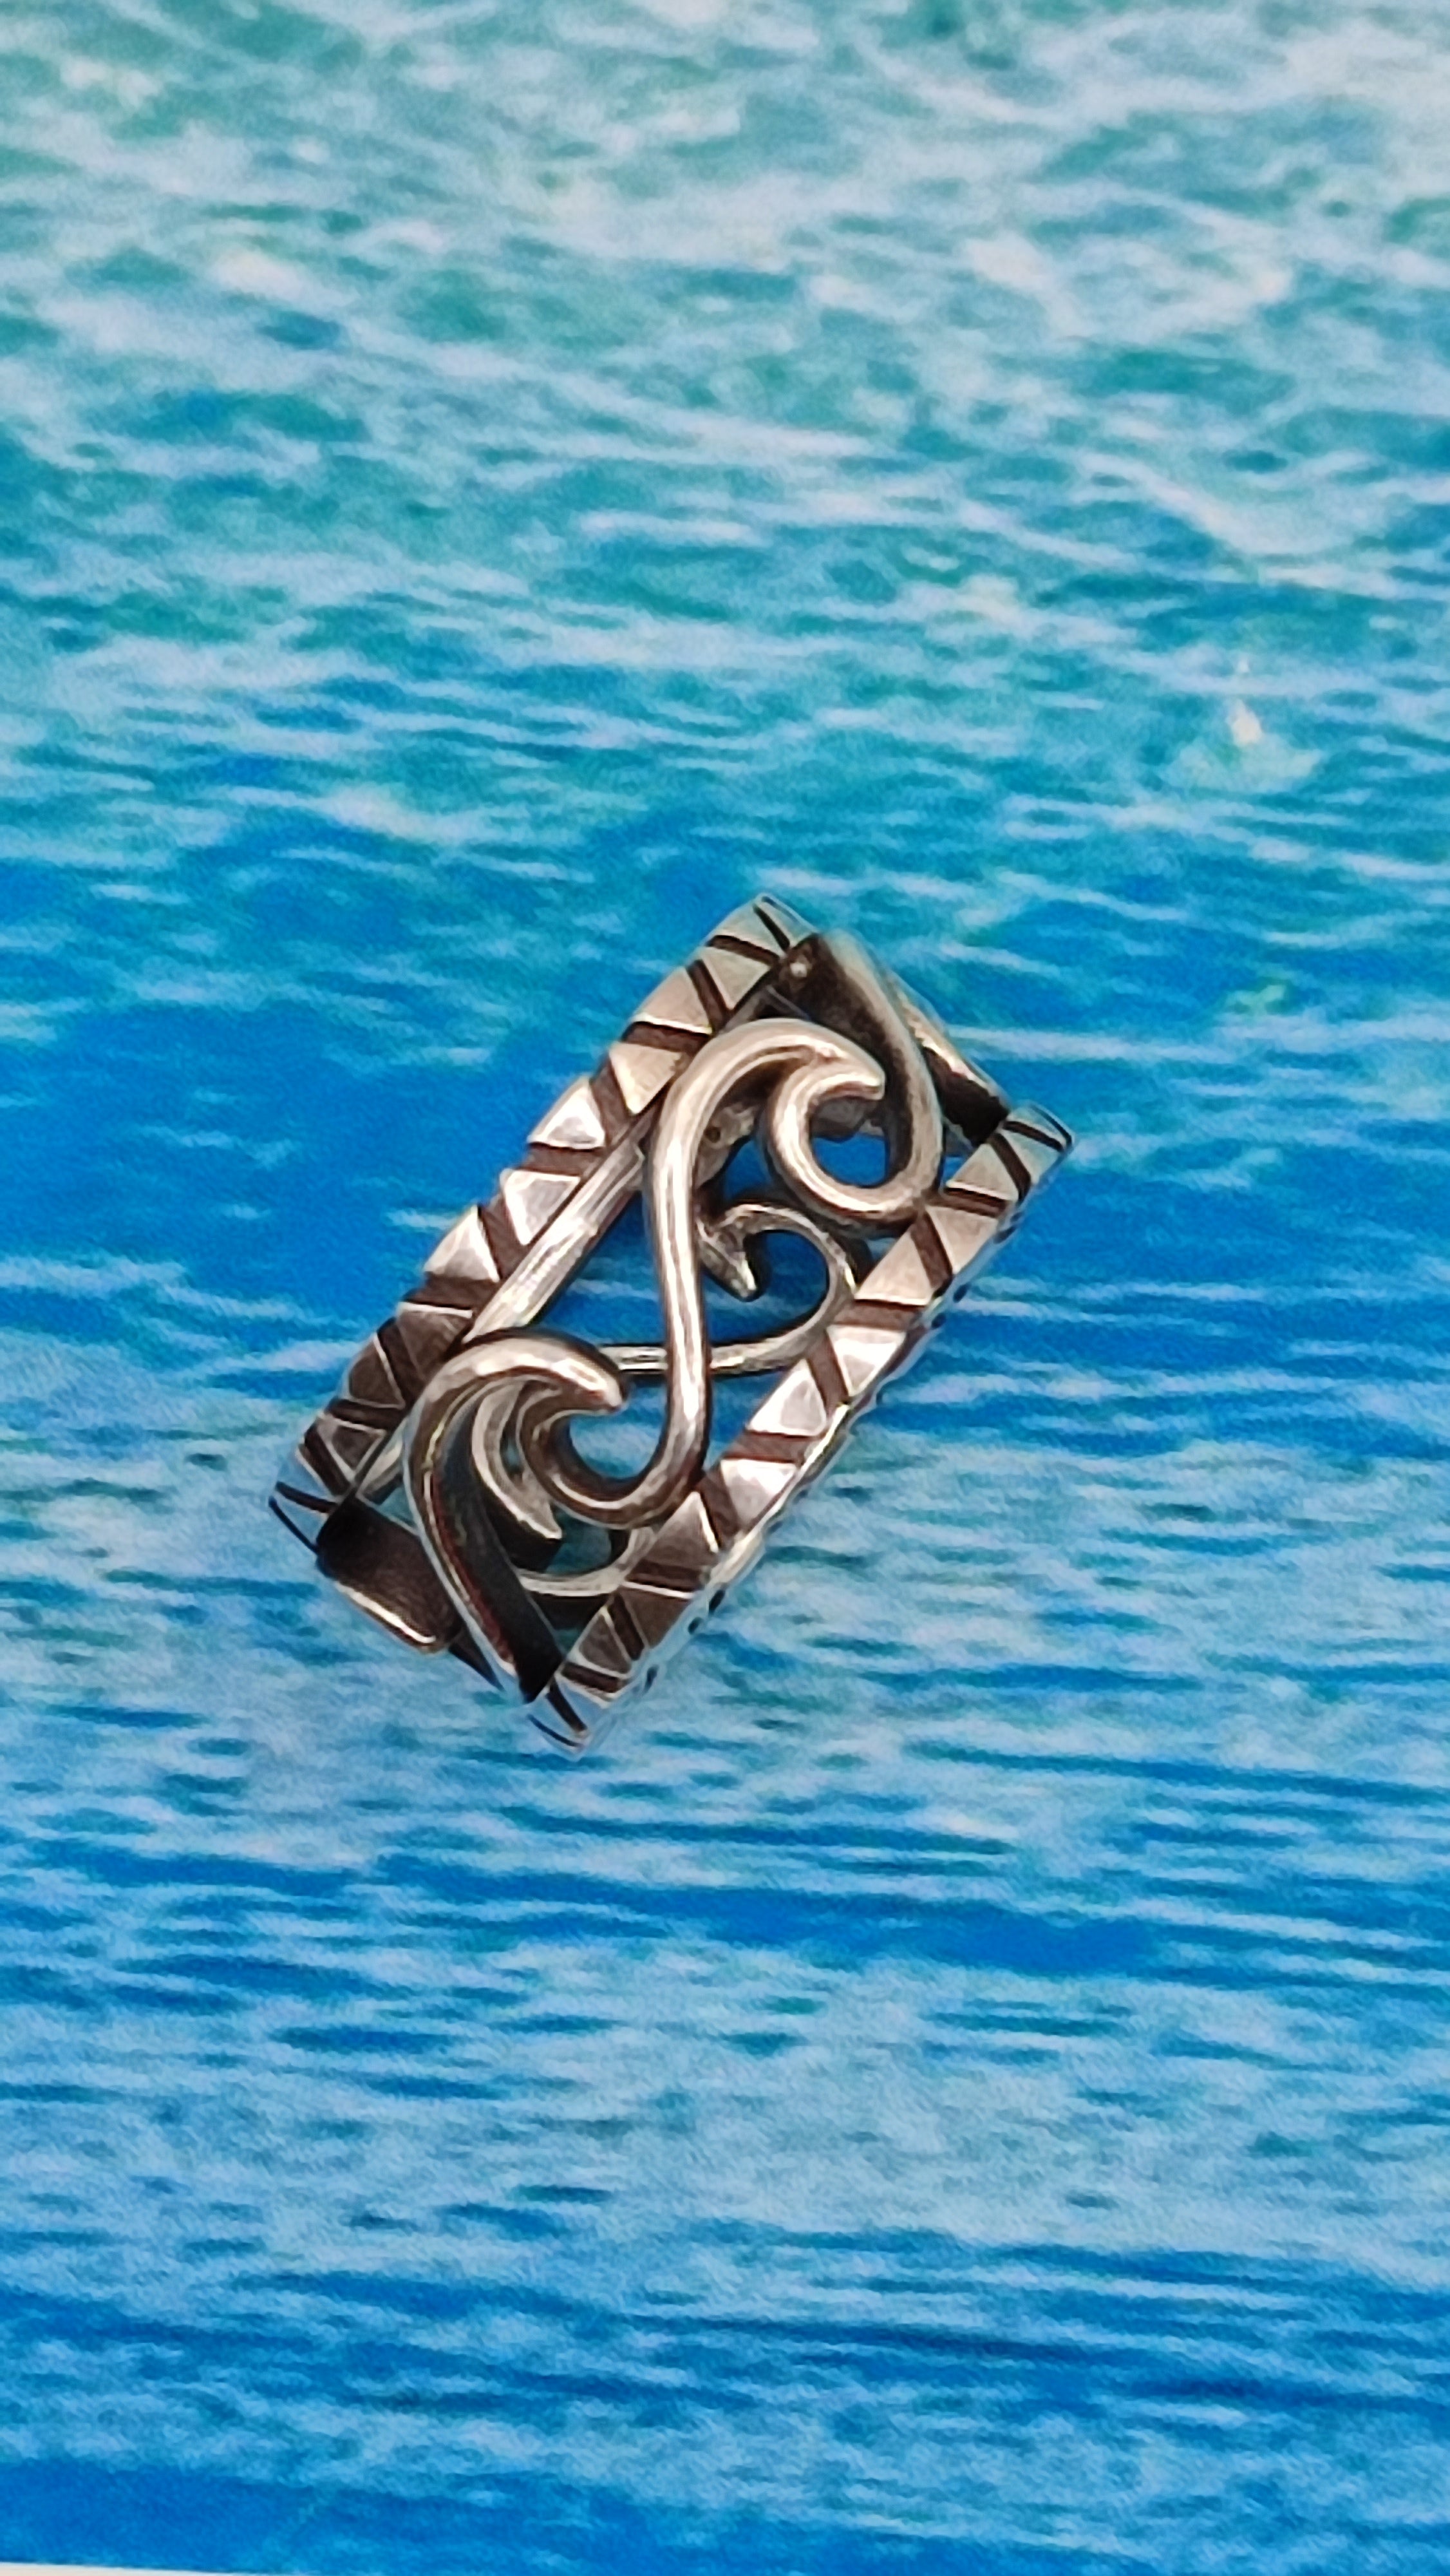 anello onde hawaiane argento 925 stile tribale maori